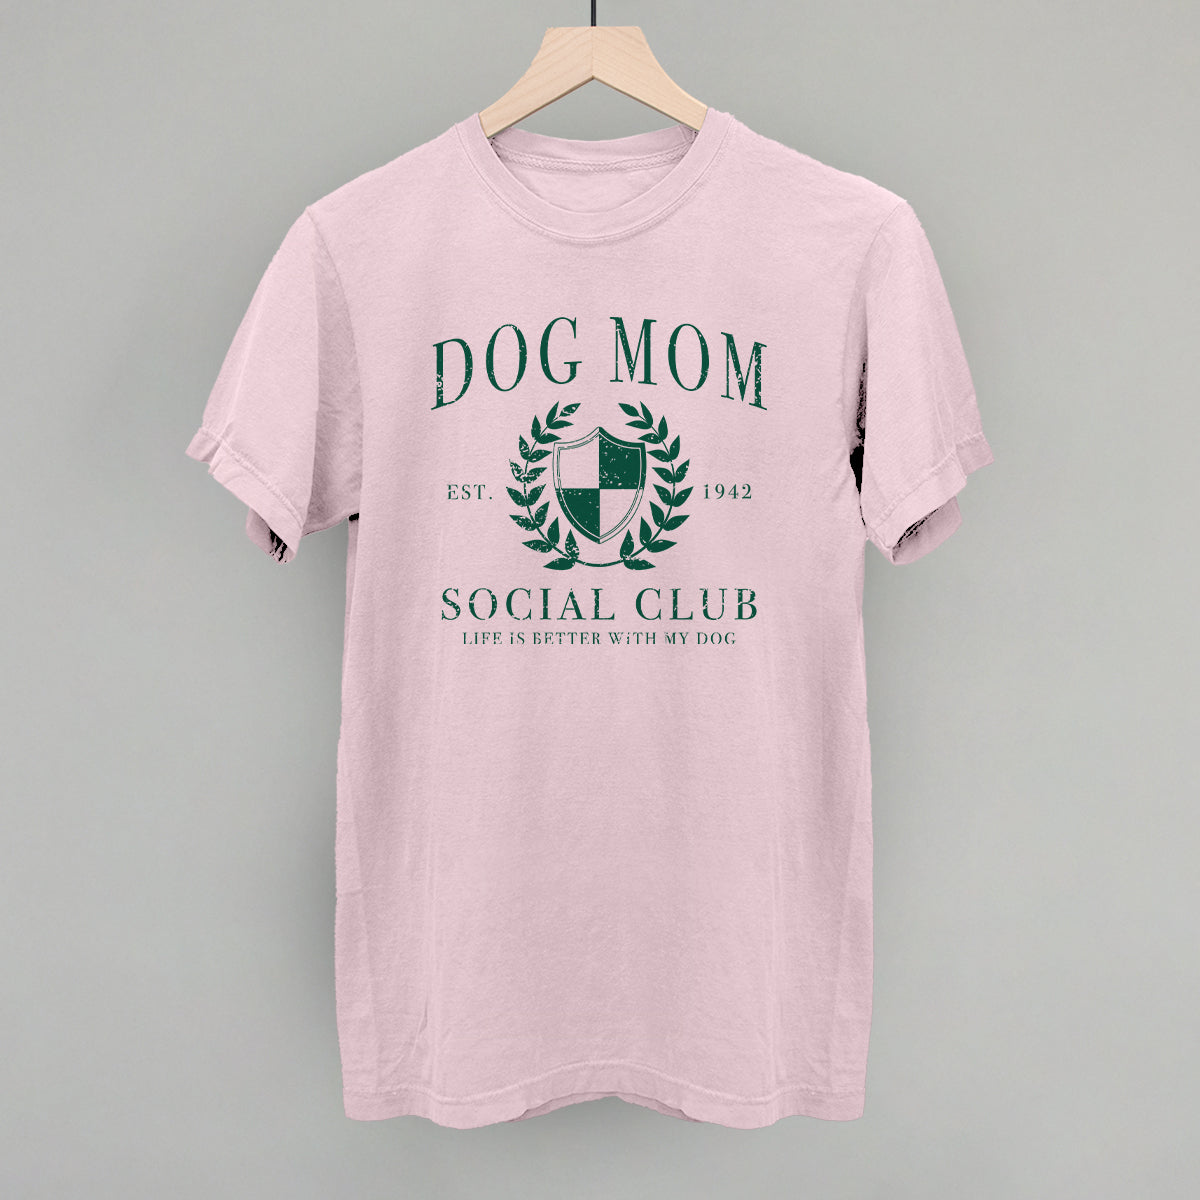 Dog Mom Social Club